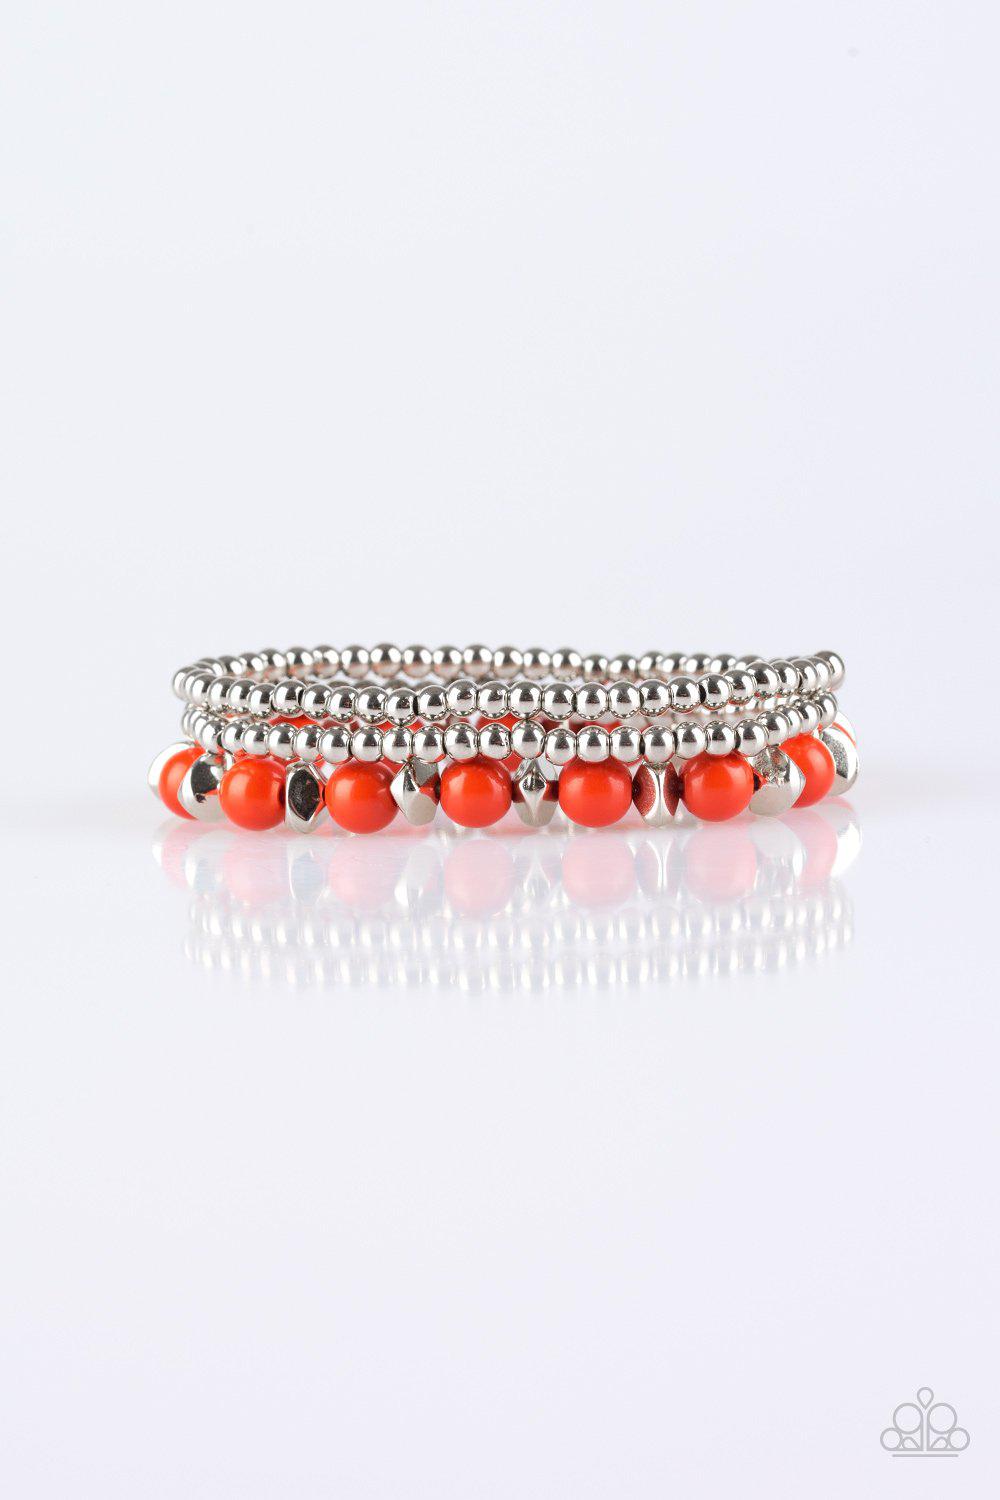 Epic Escape Orange and Silver Stretch Bracelet Set - Paparazzi Accessories-CarasShop.com - $5 Jewelry by Cara Jewels